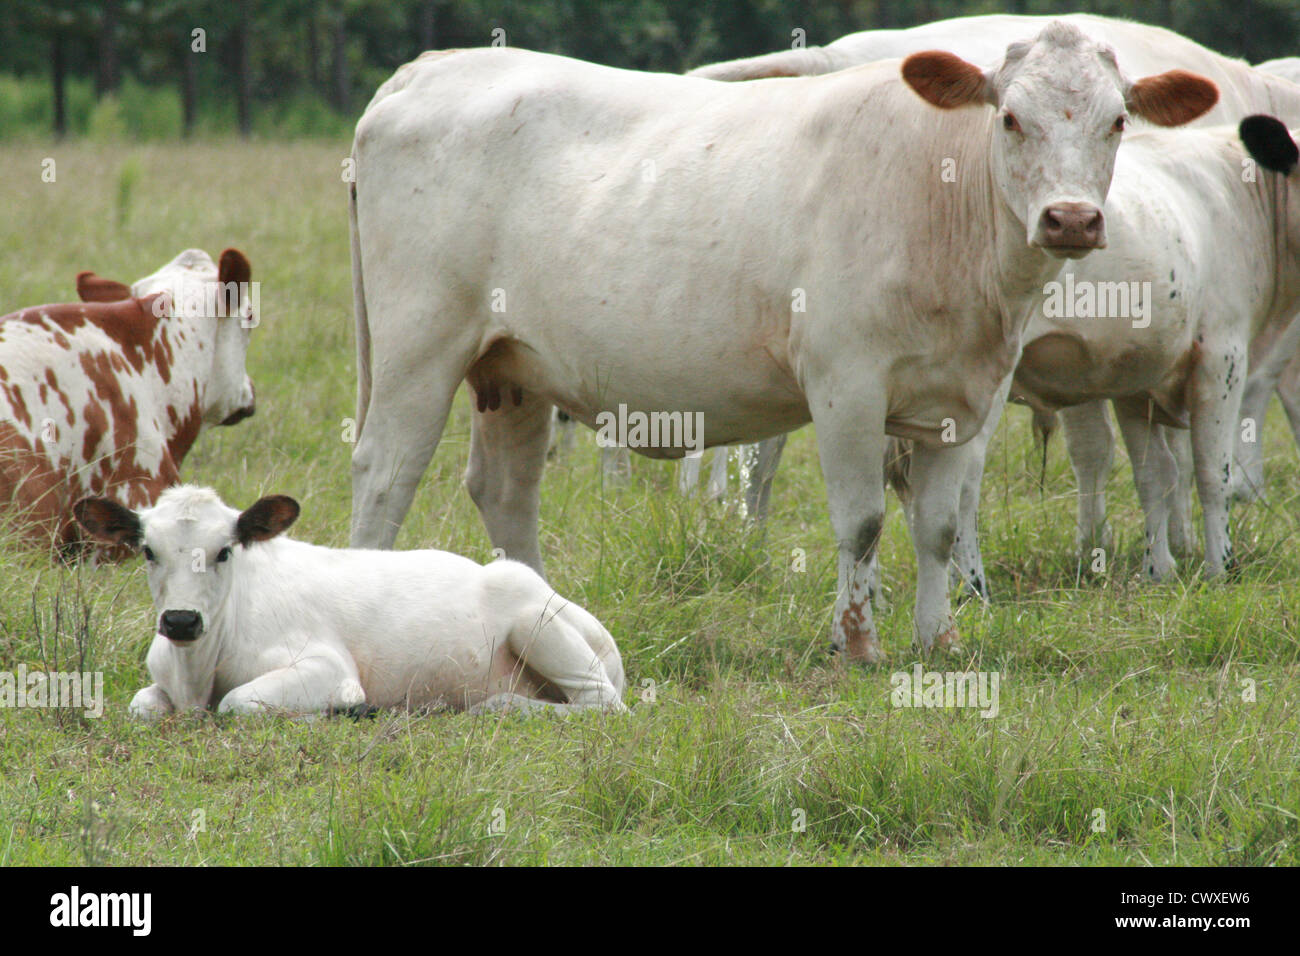 cow cattle farm animals Stock Photo